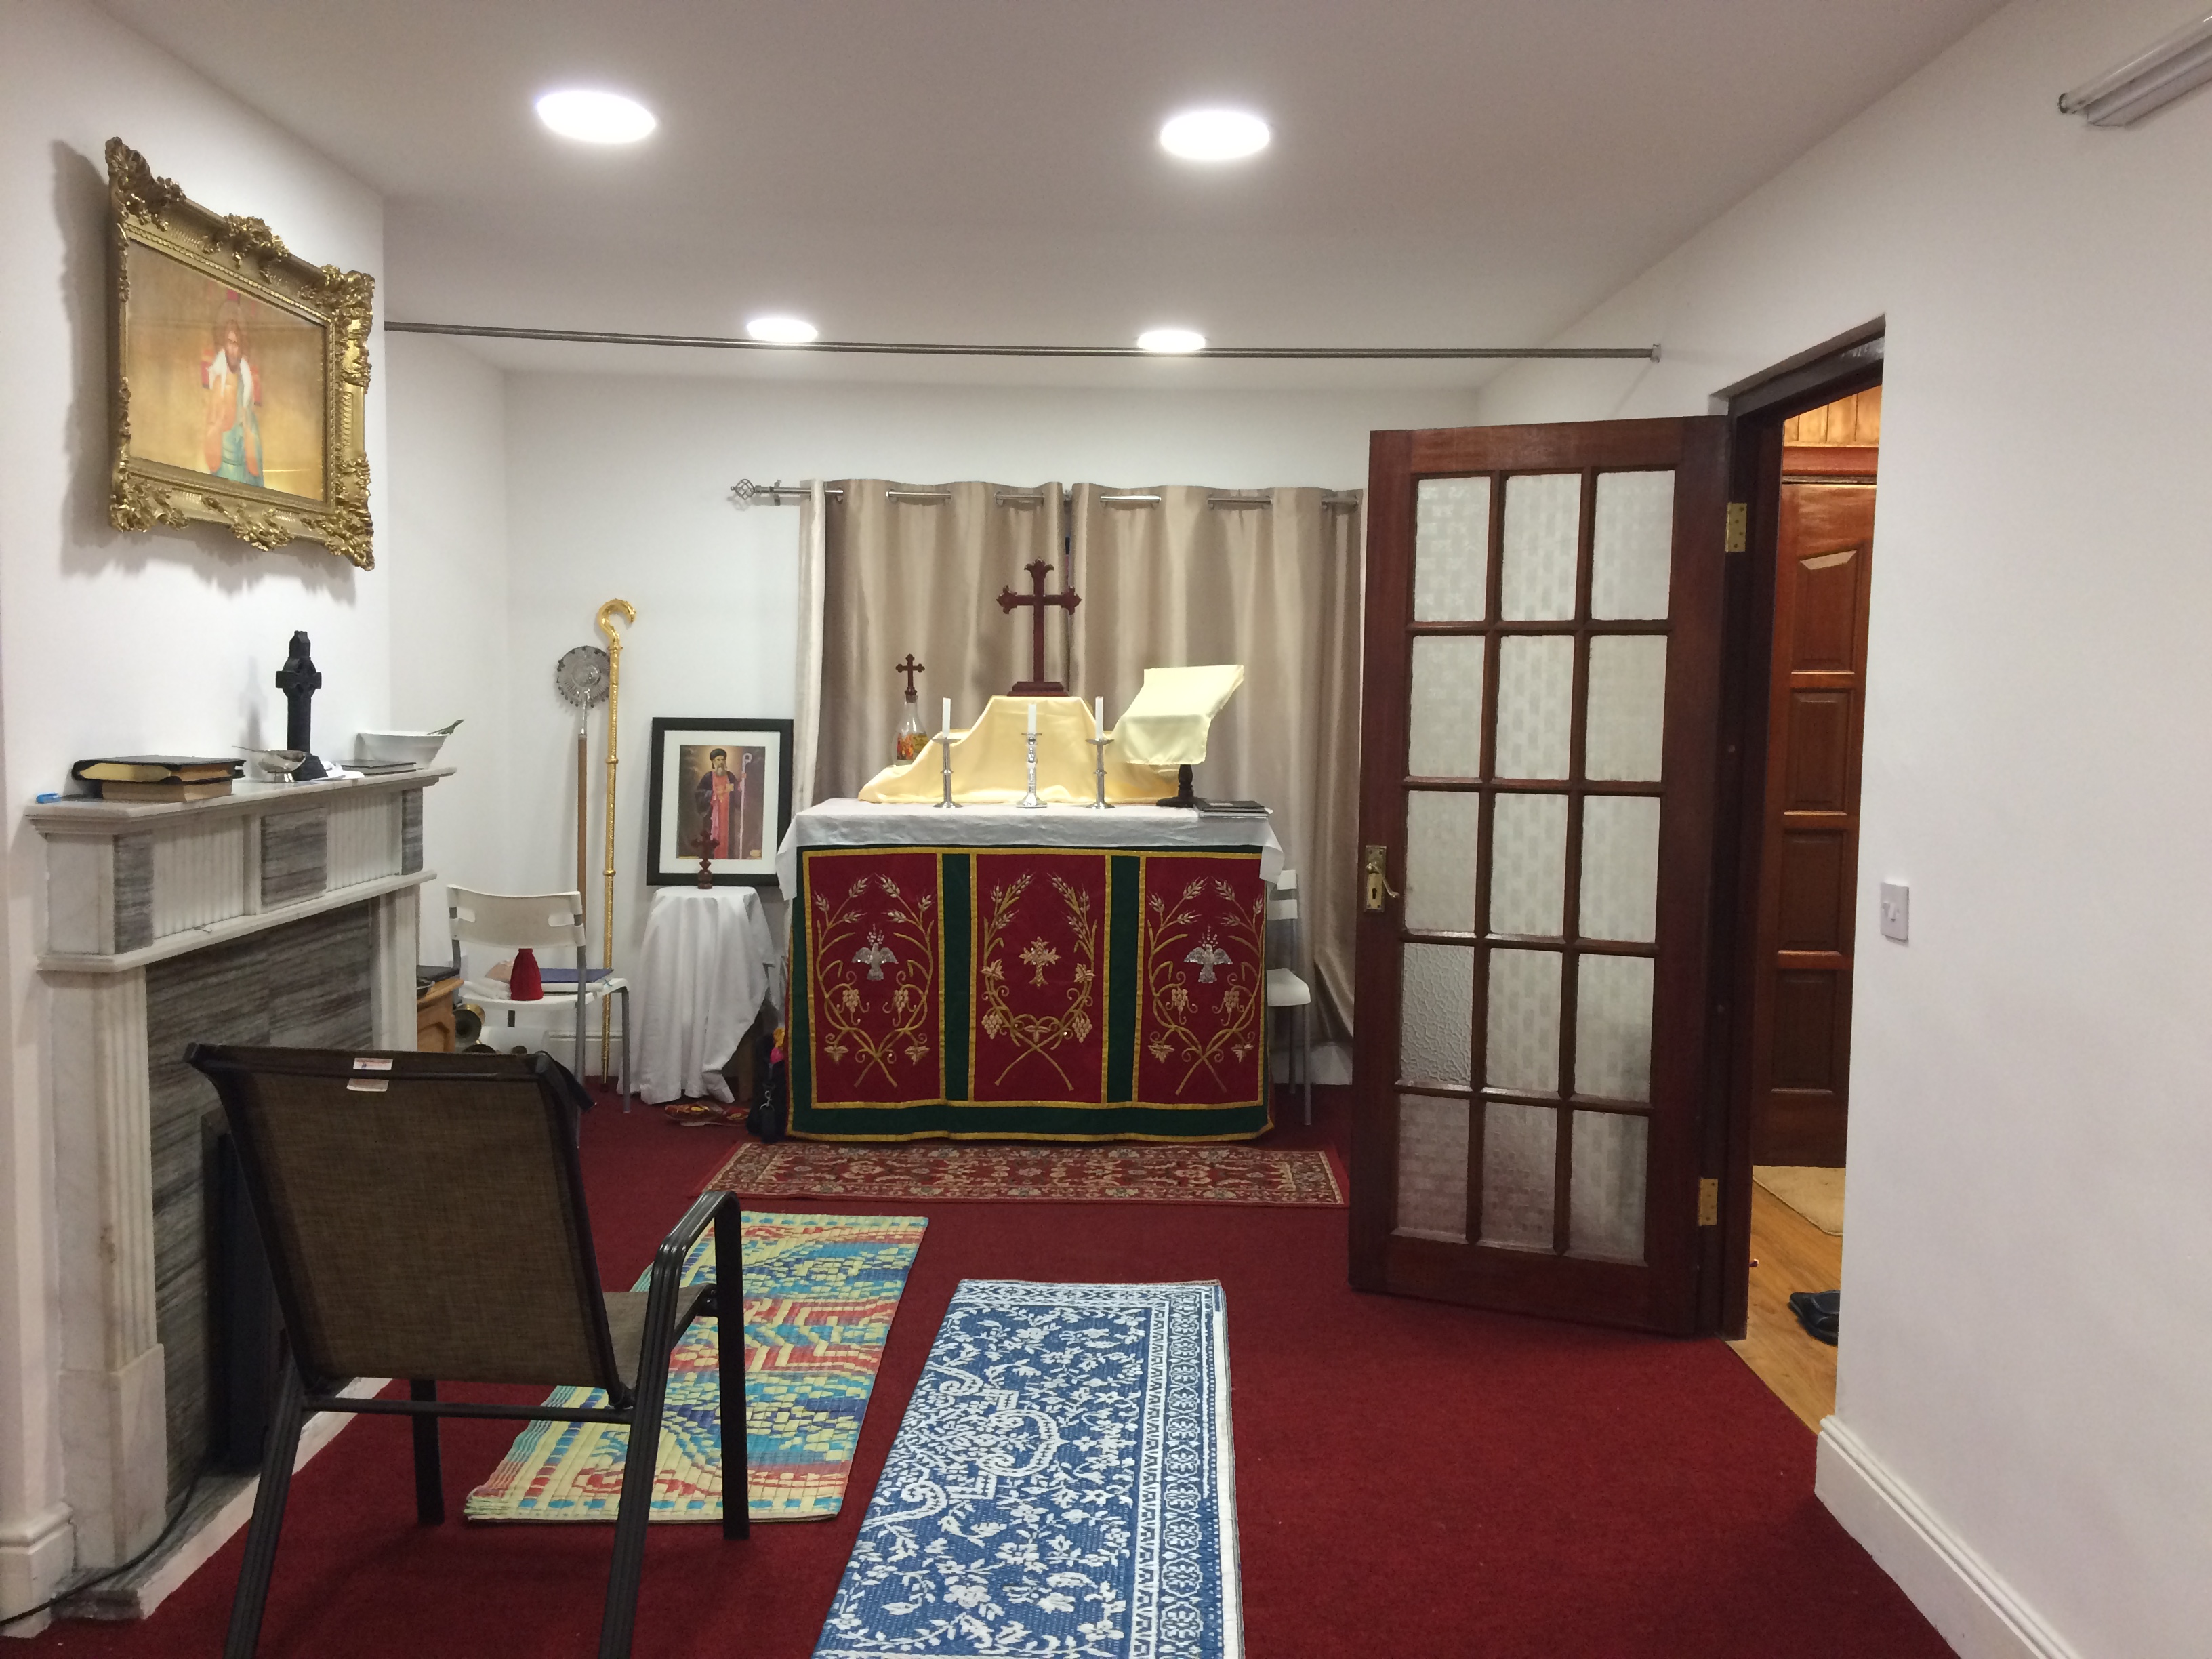 The Malankara House consecrated in Ireland